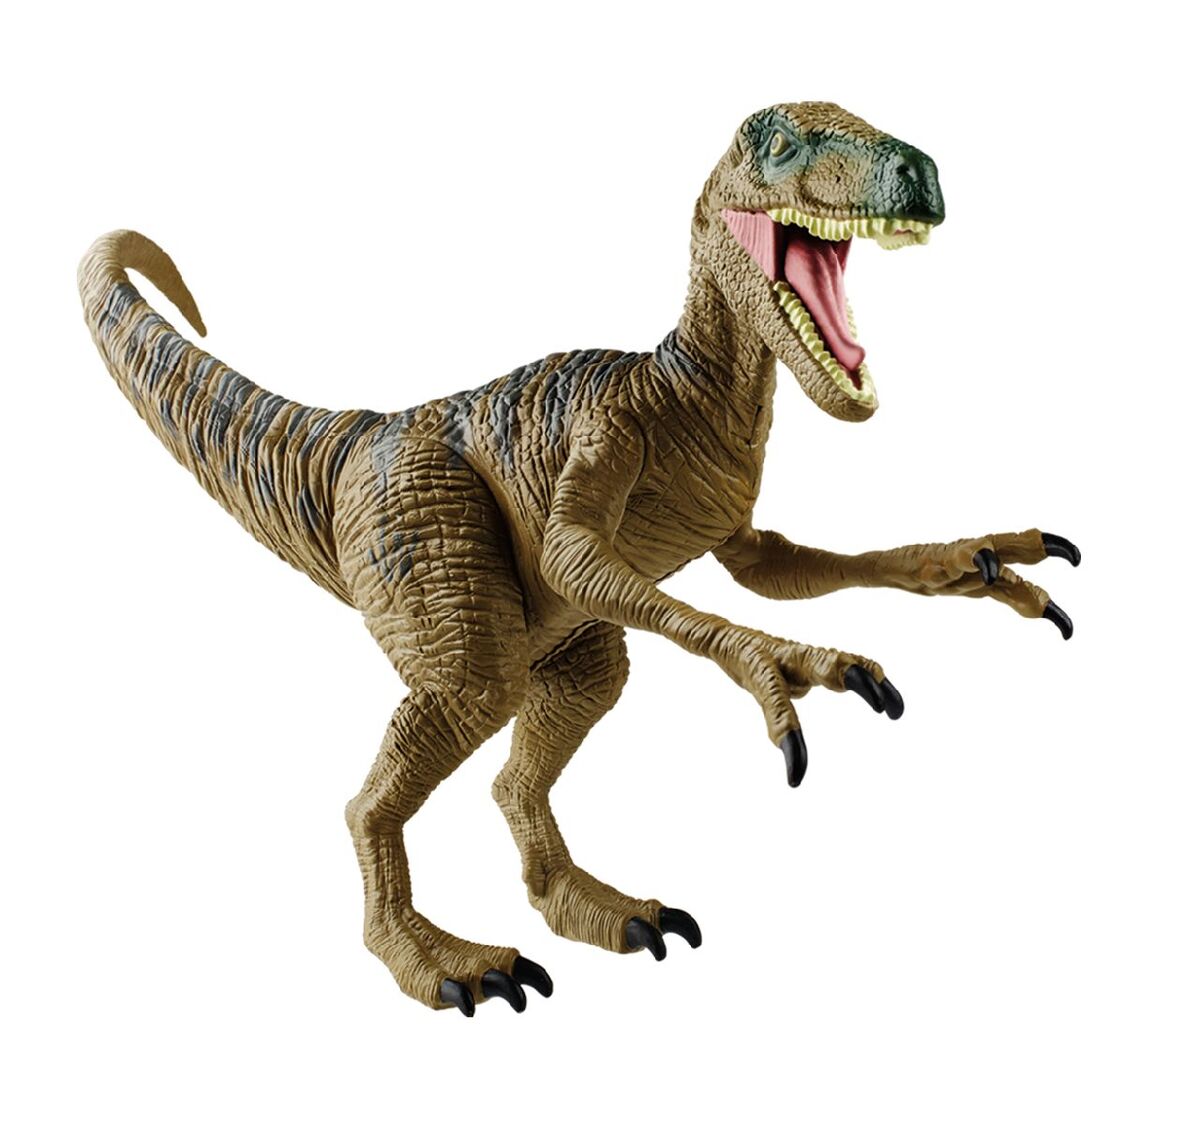 LEGO Jurassic World (toy line), Jurassic Park Wiki